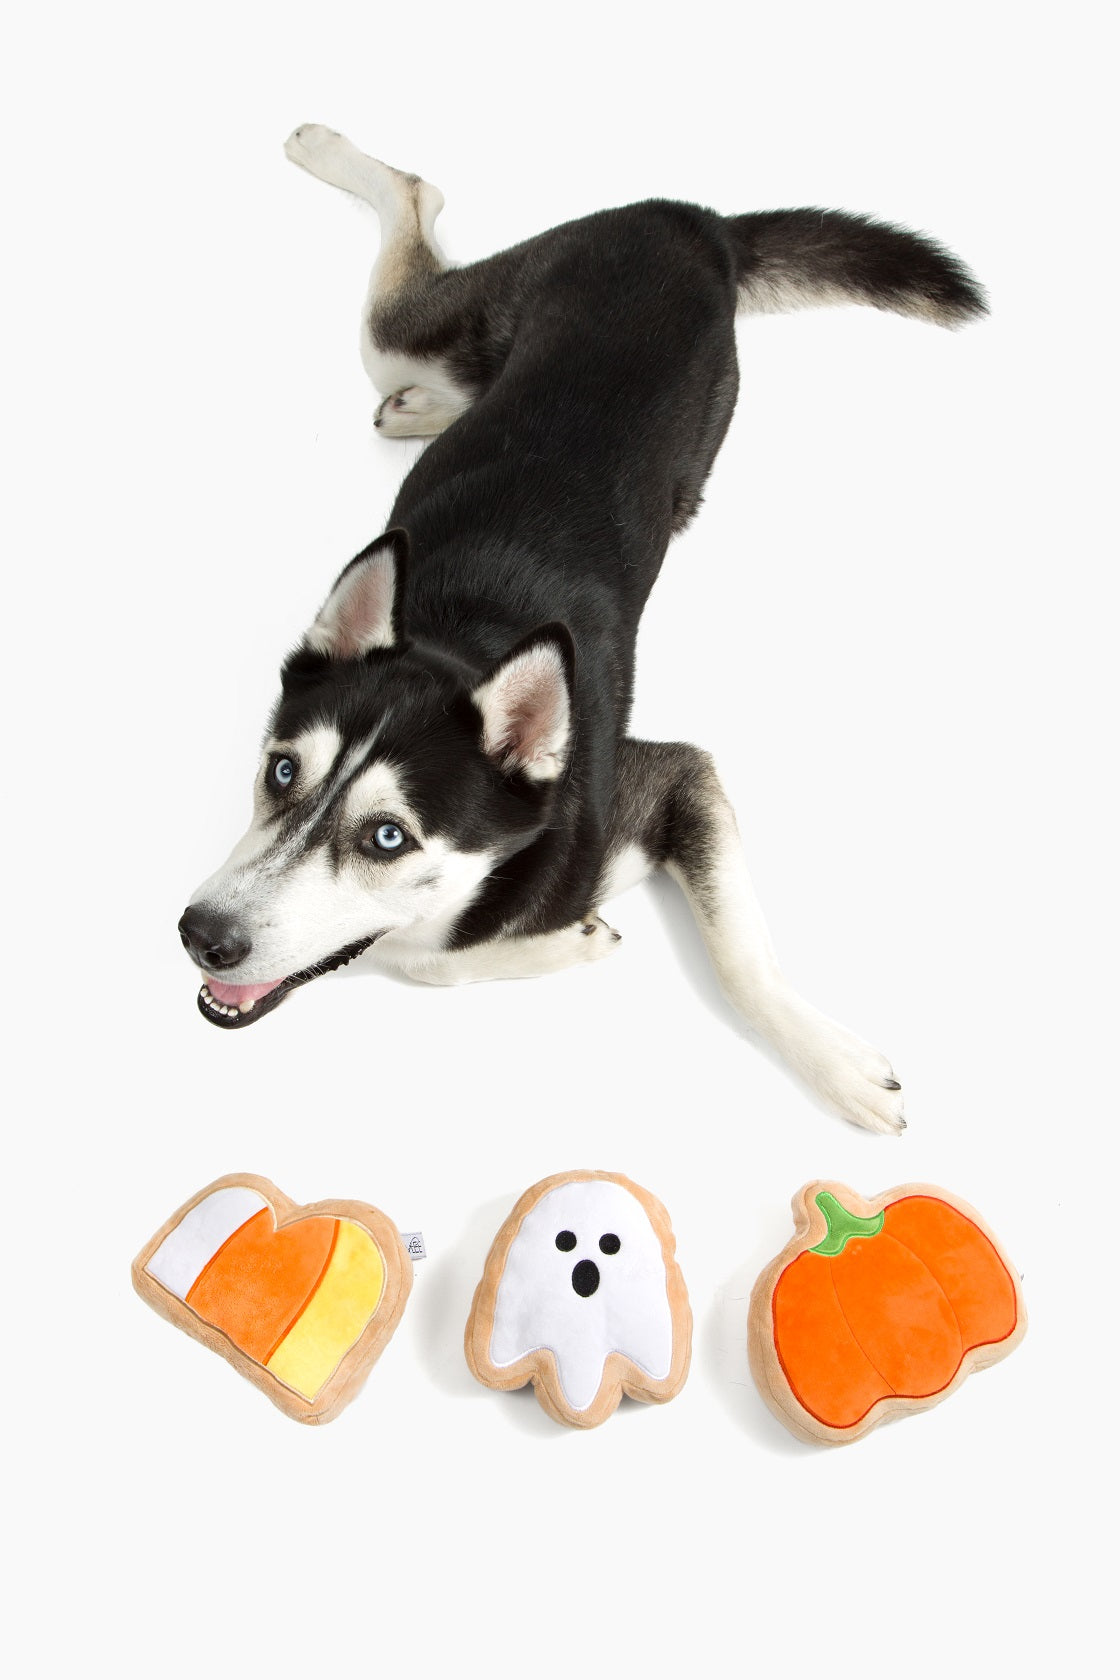 Midlee Boo Sugar Cookie Halloween Plush Dog Toys